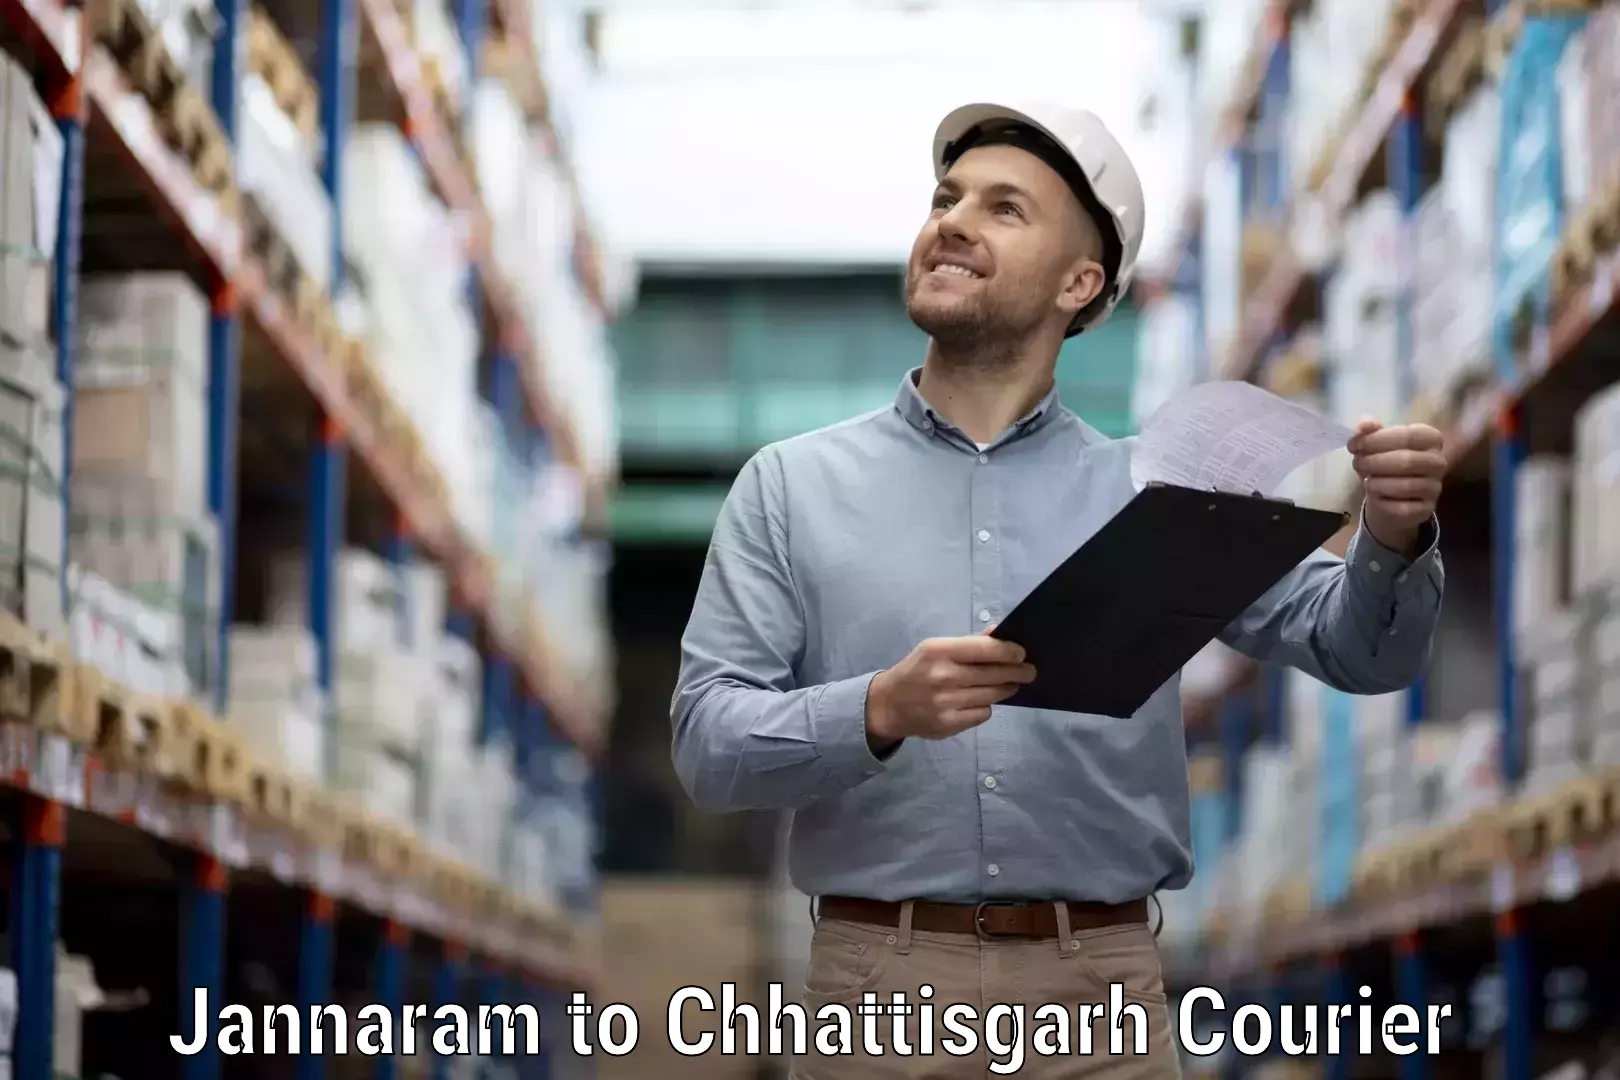 Courier service innovation in Jannaram to Raigarh Chhattisgarh